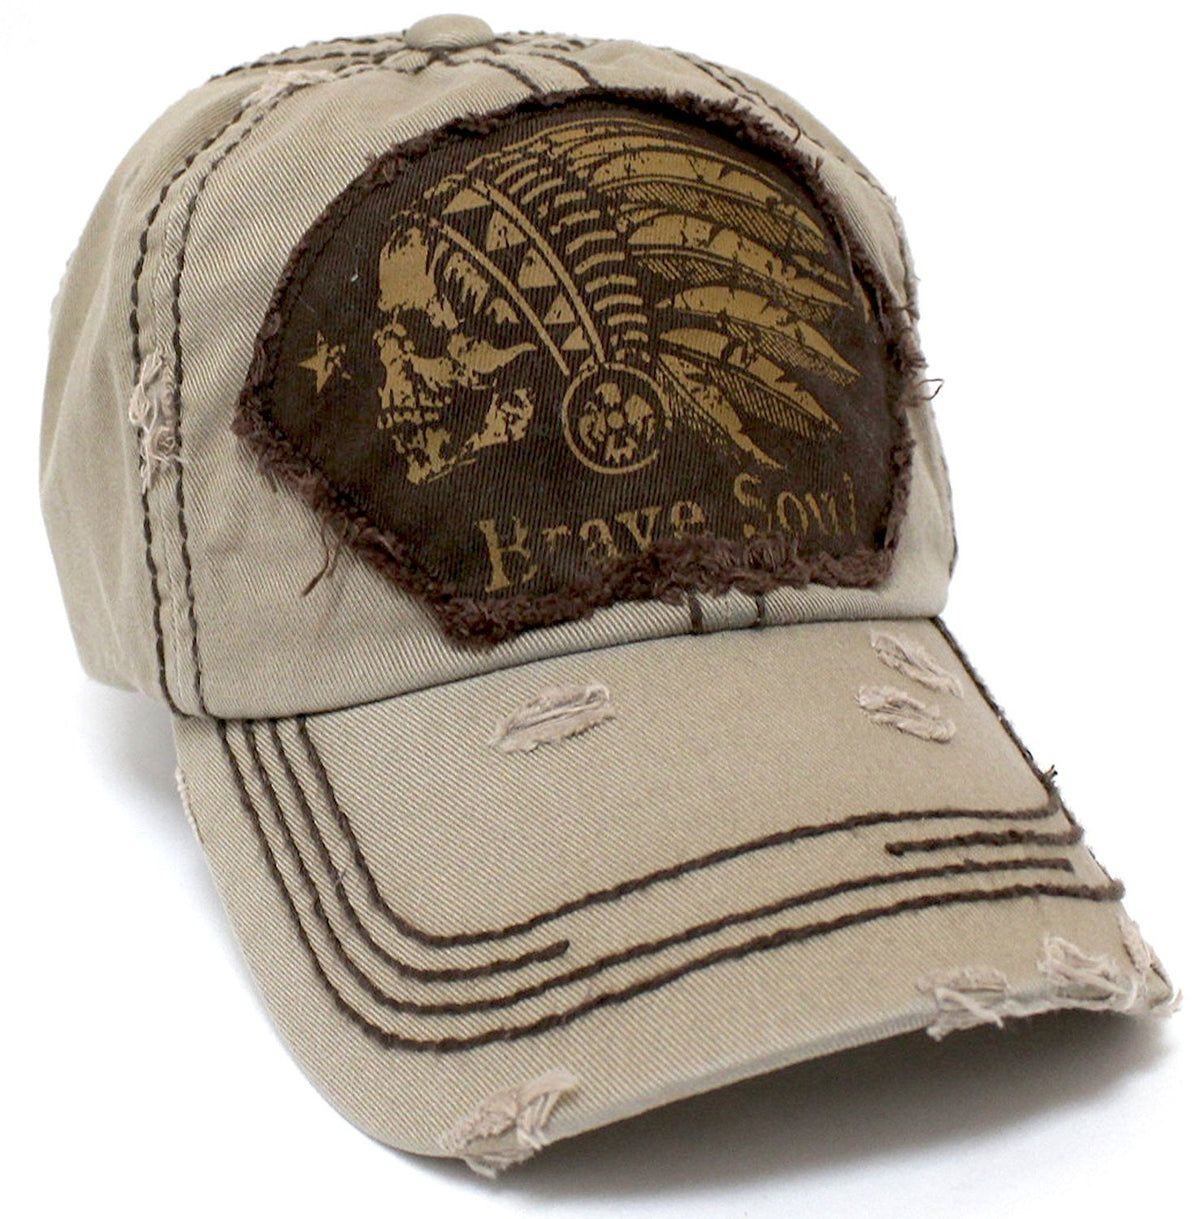 Chief Skull "Brave Soul" Patch Embroidery Vintage Cap - Caps 'N Vintage 